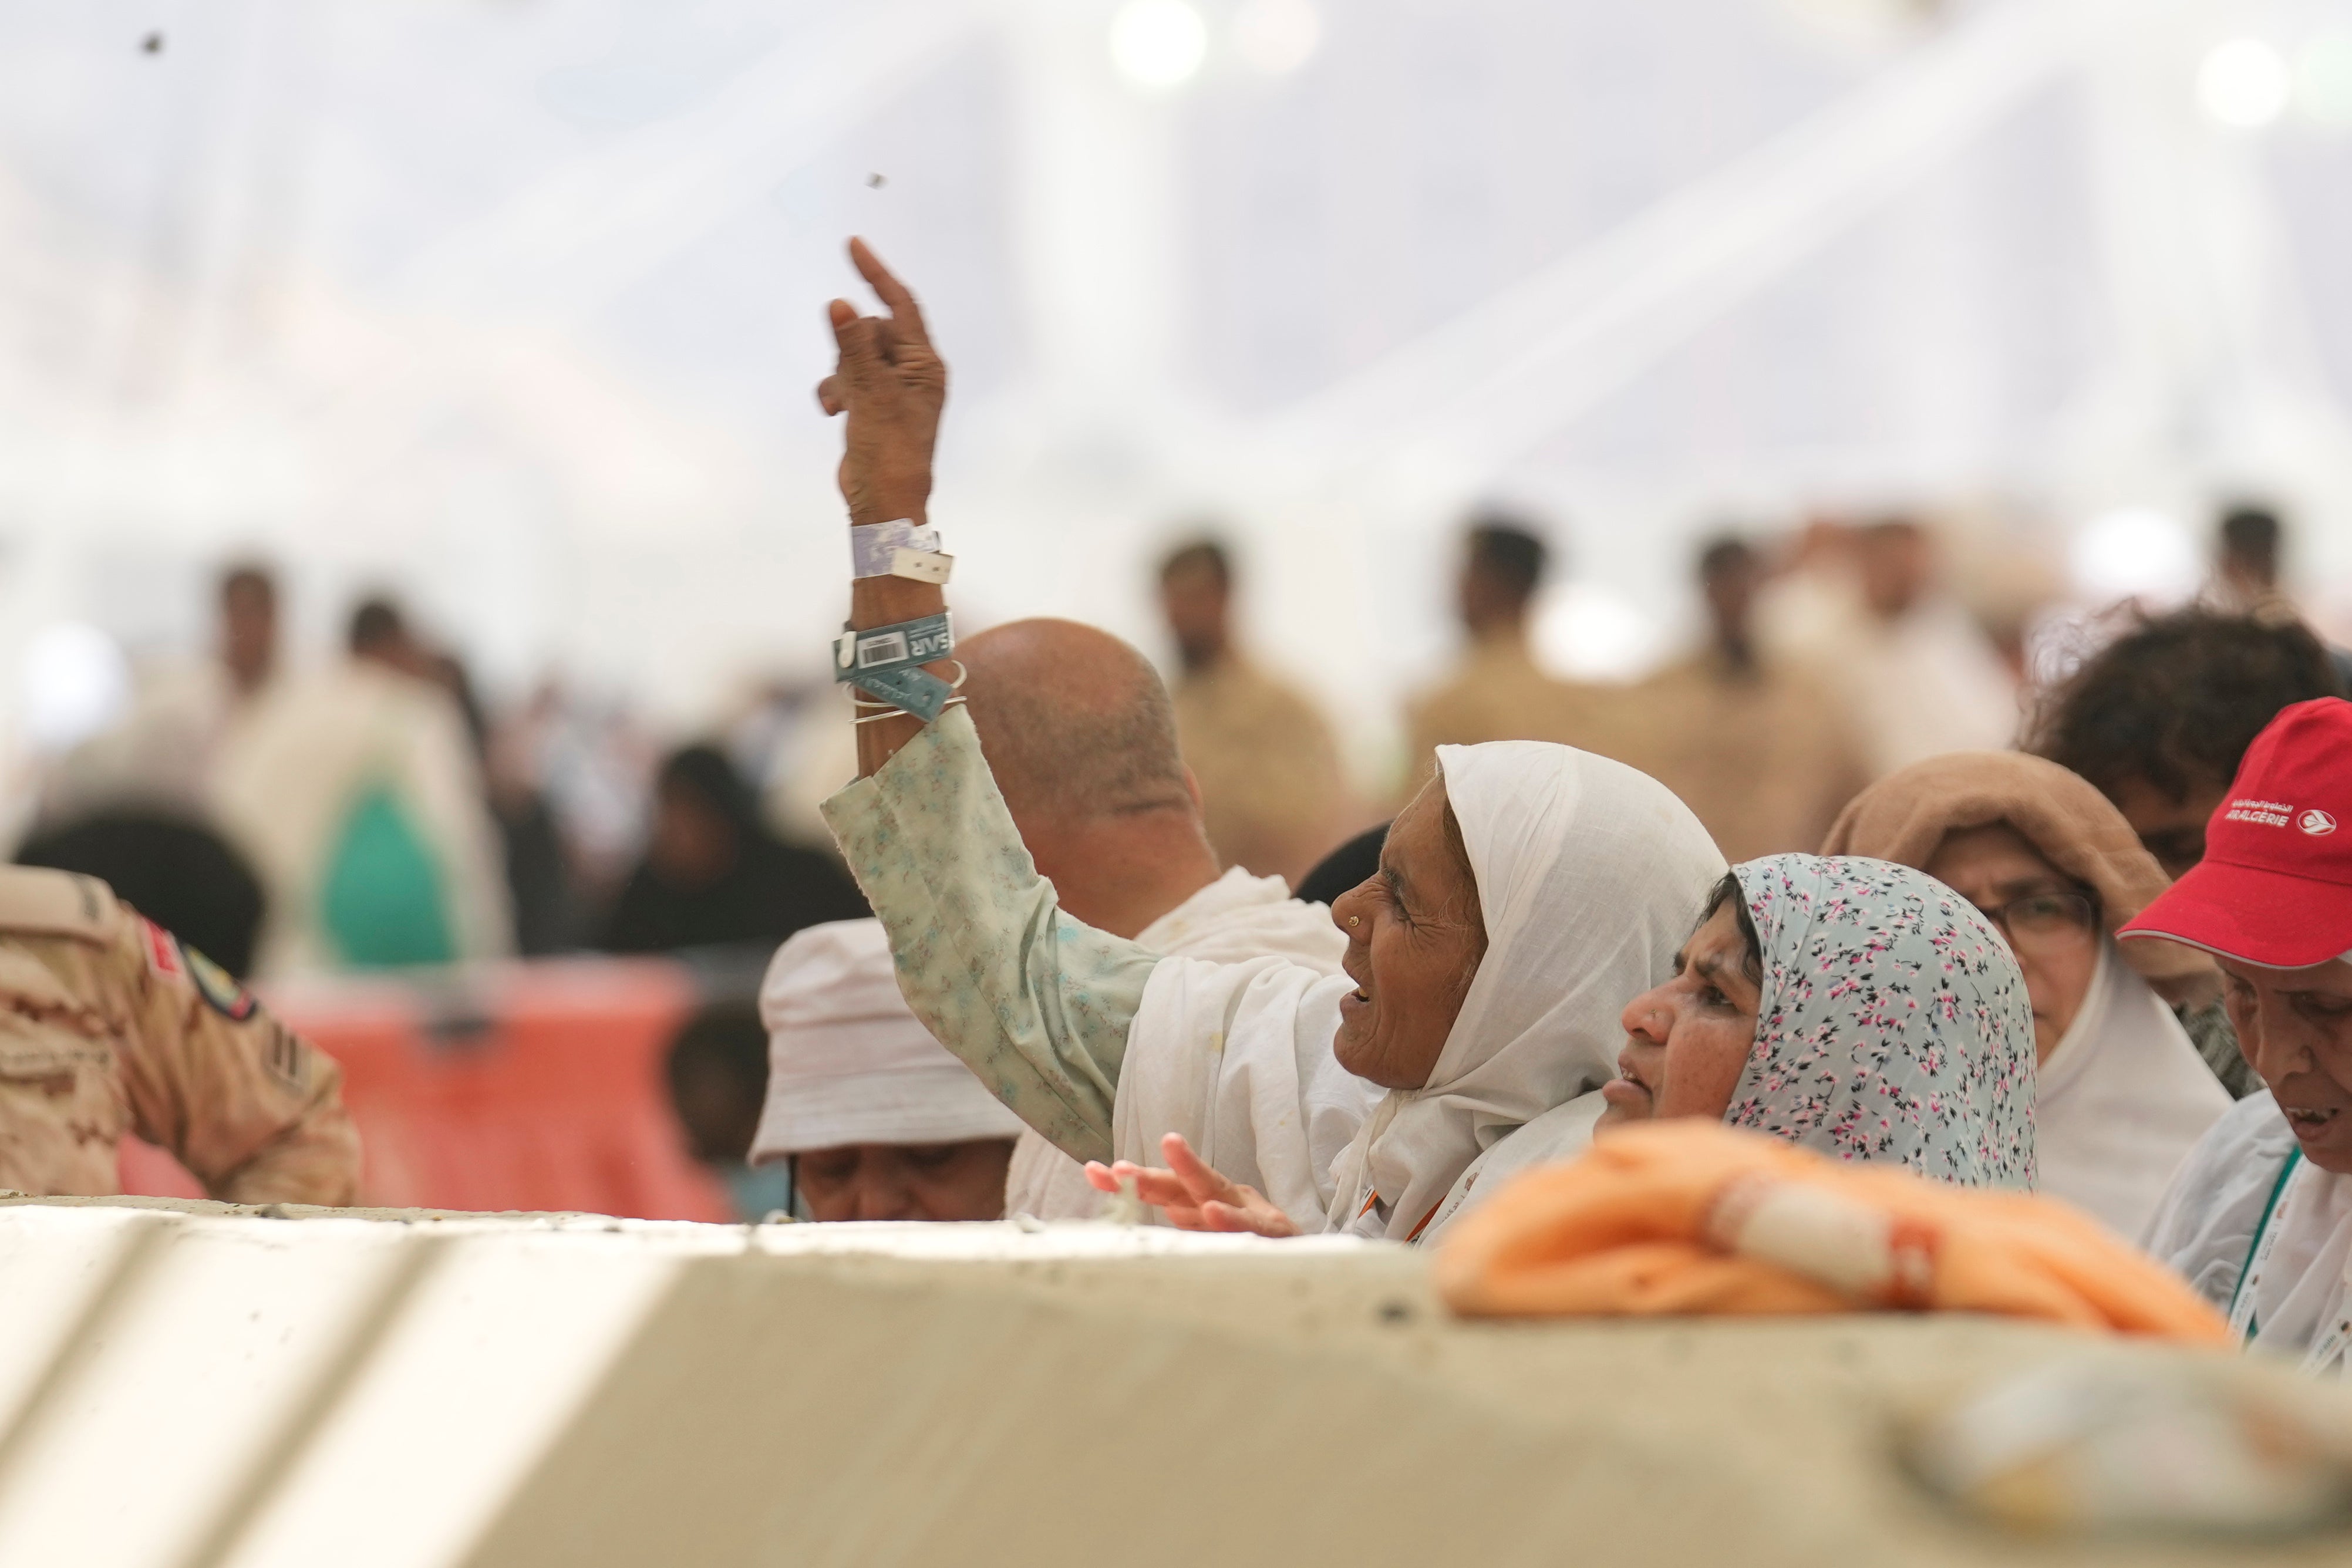 Muslim pilgrims cast stones at pillars in the symbolic stoning of the devil, the last rite of the annual hajj